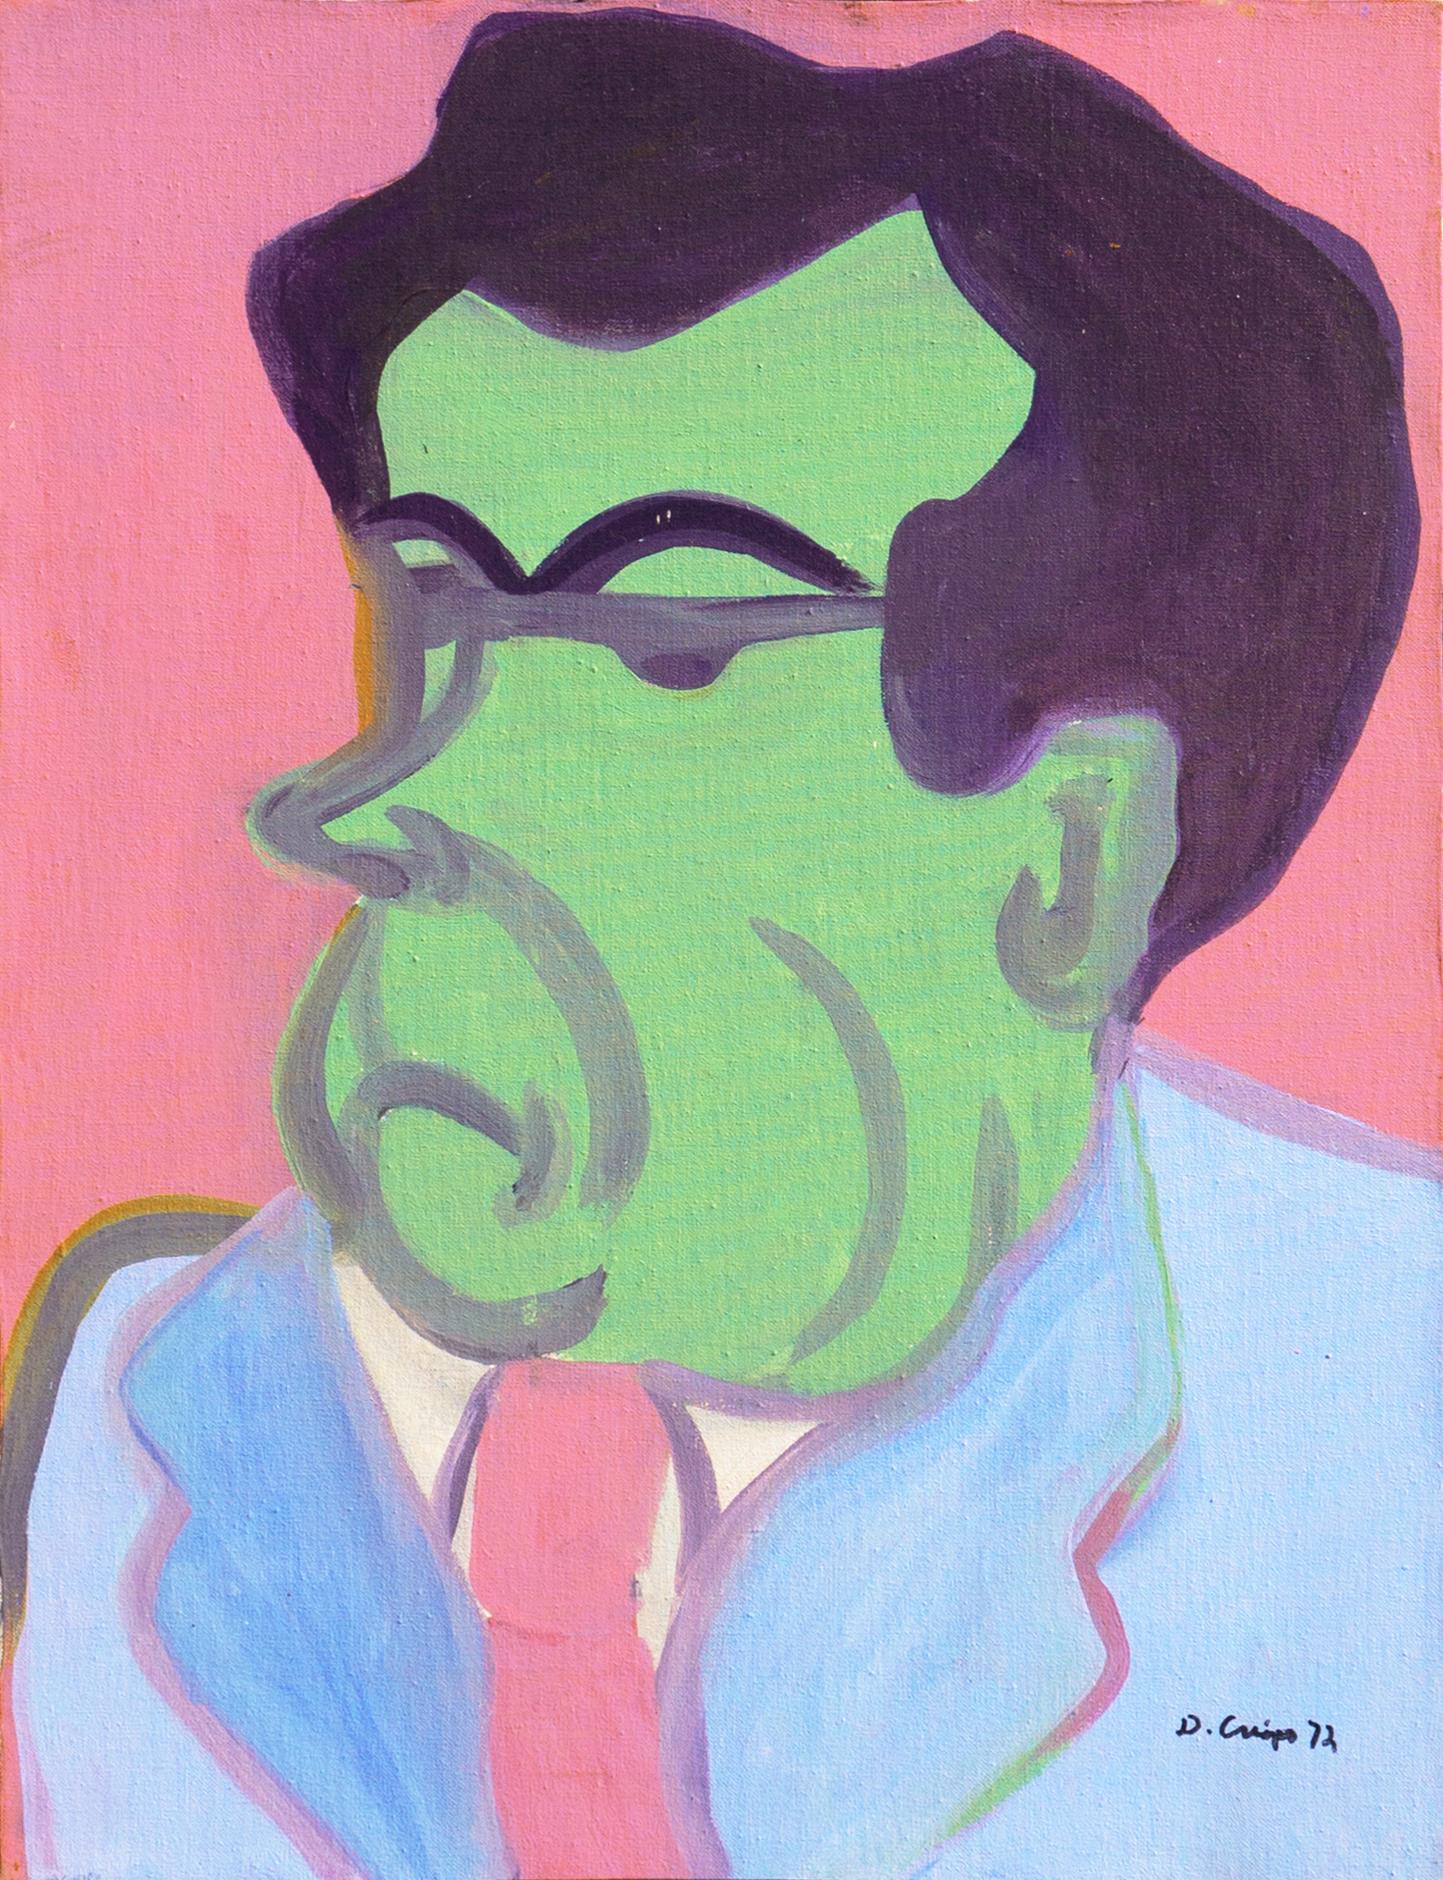 Portrait Painting Dick Crispo - 'Richard Milhouse Nixon', Carmel Art Association, Oakland Art Museum, Monterey